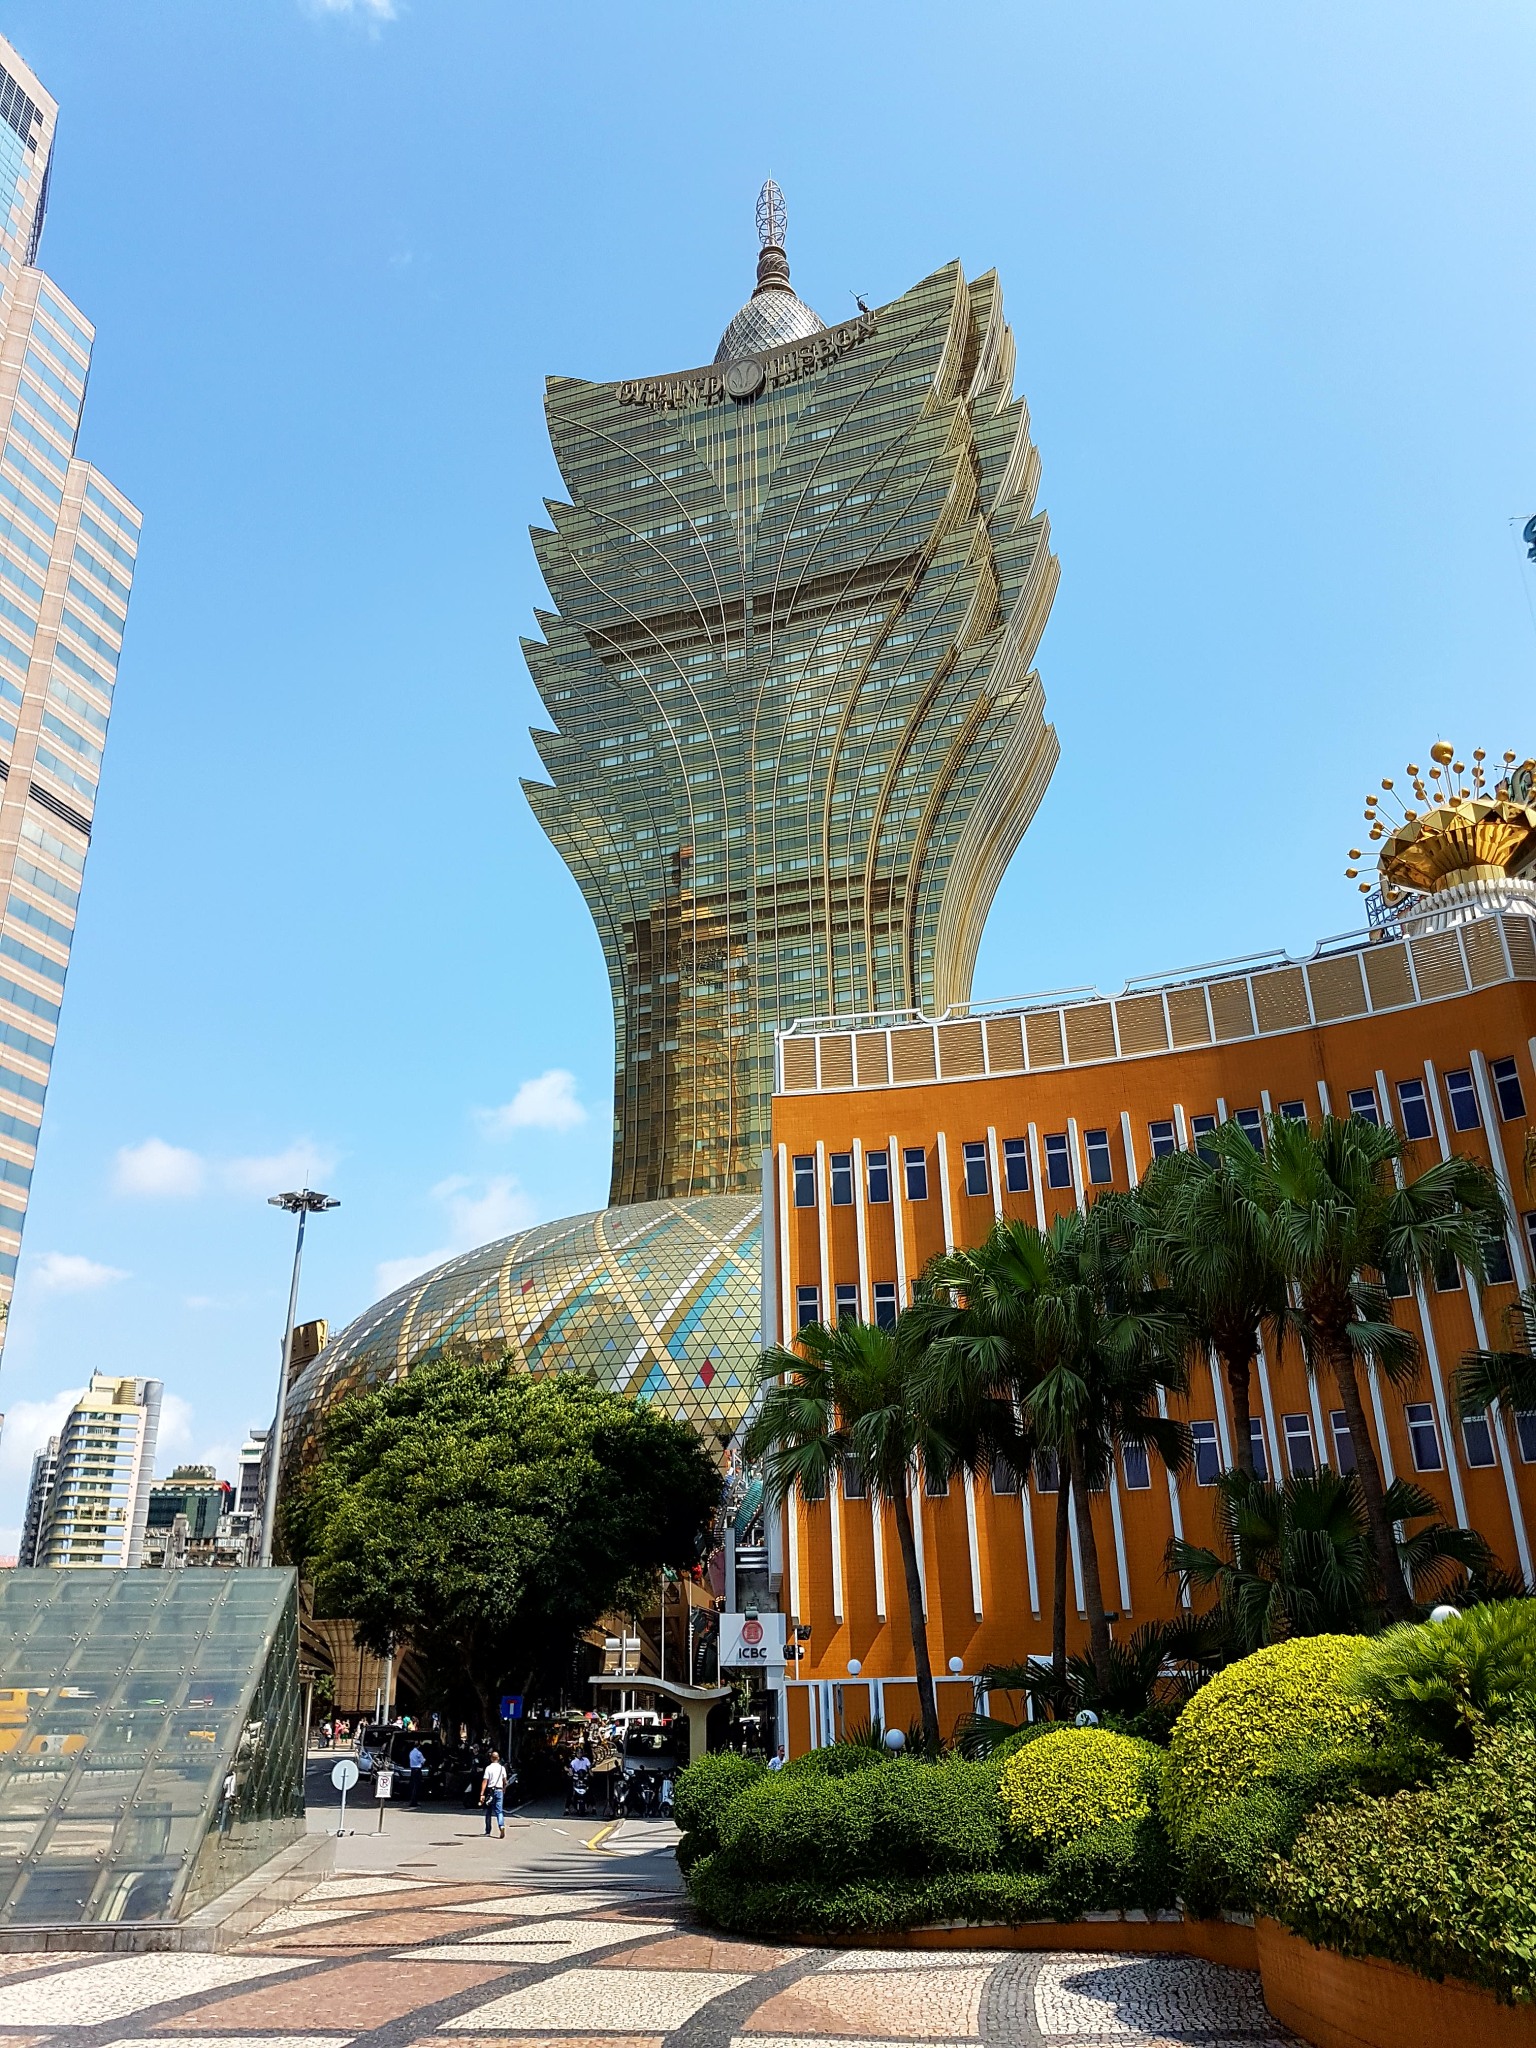 4 fakta om Macau – ME my TRAVELS and LIFE